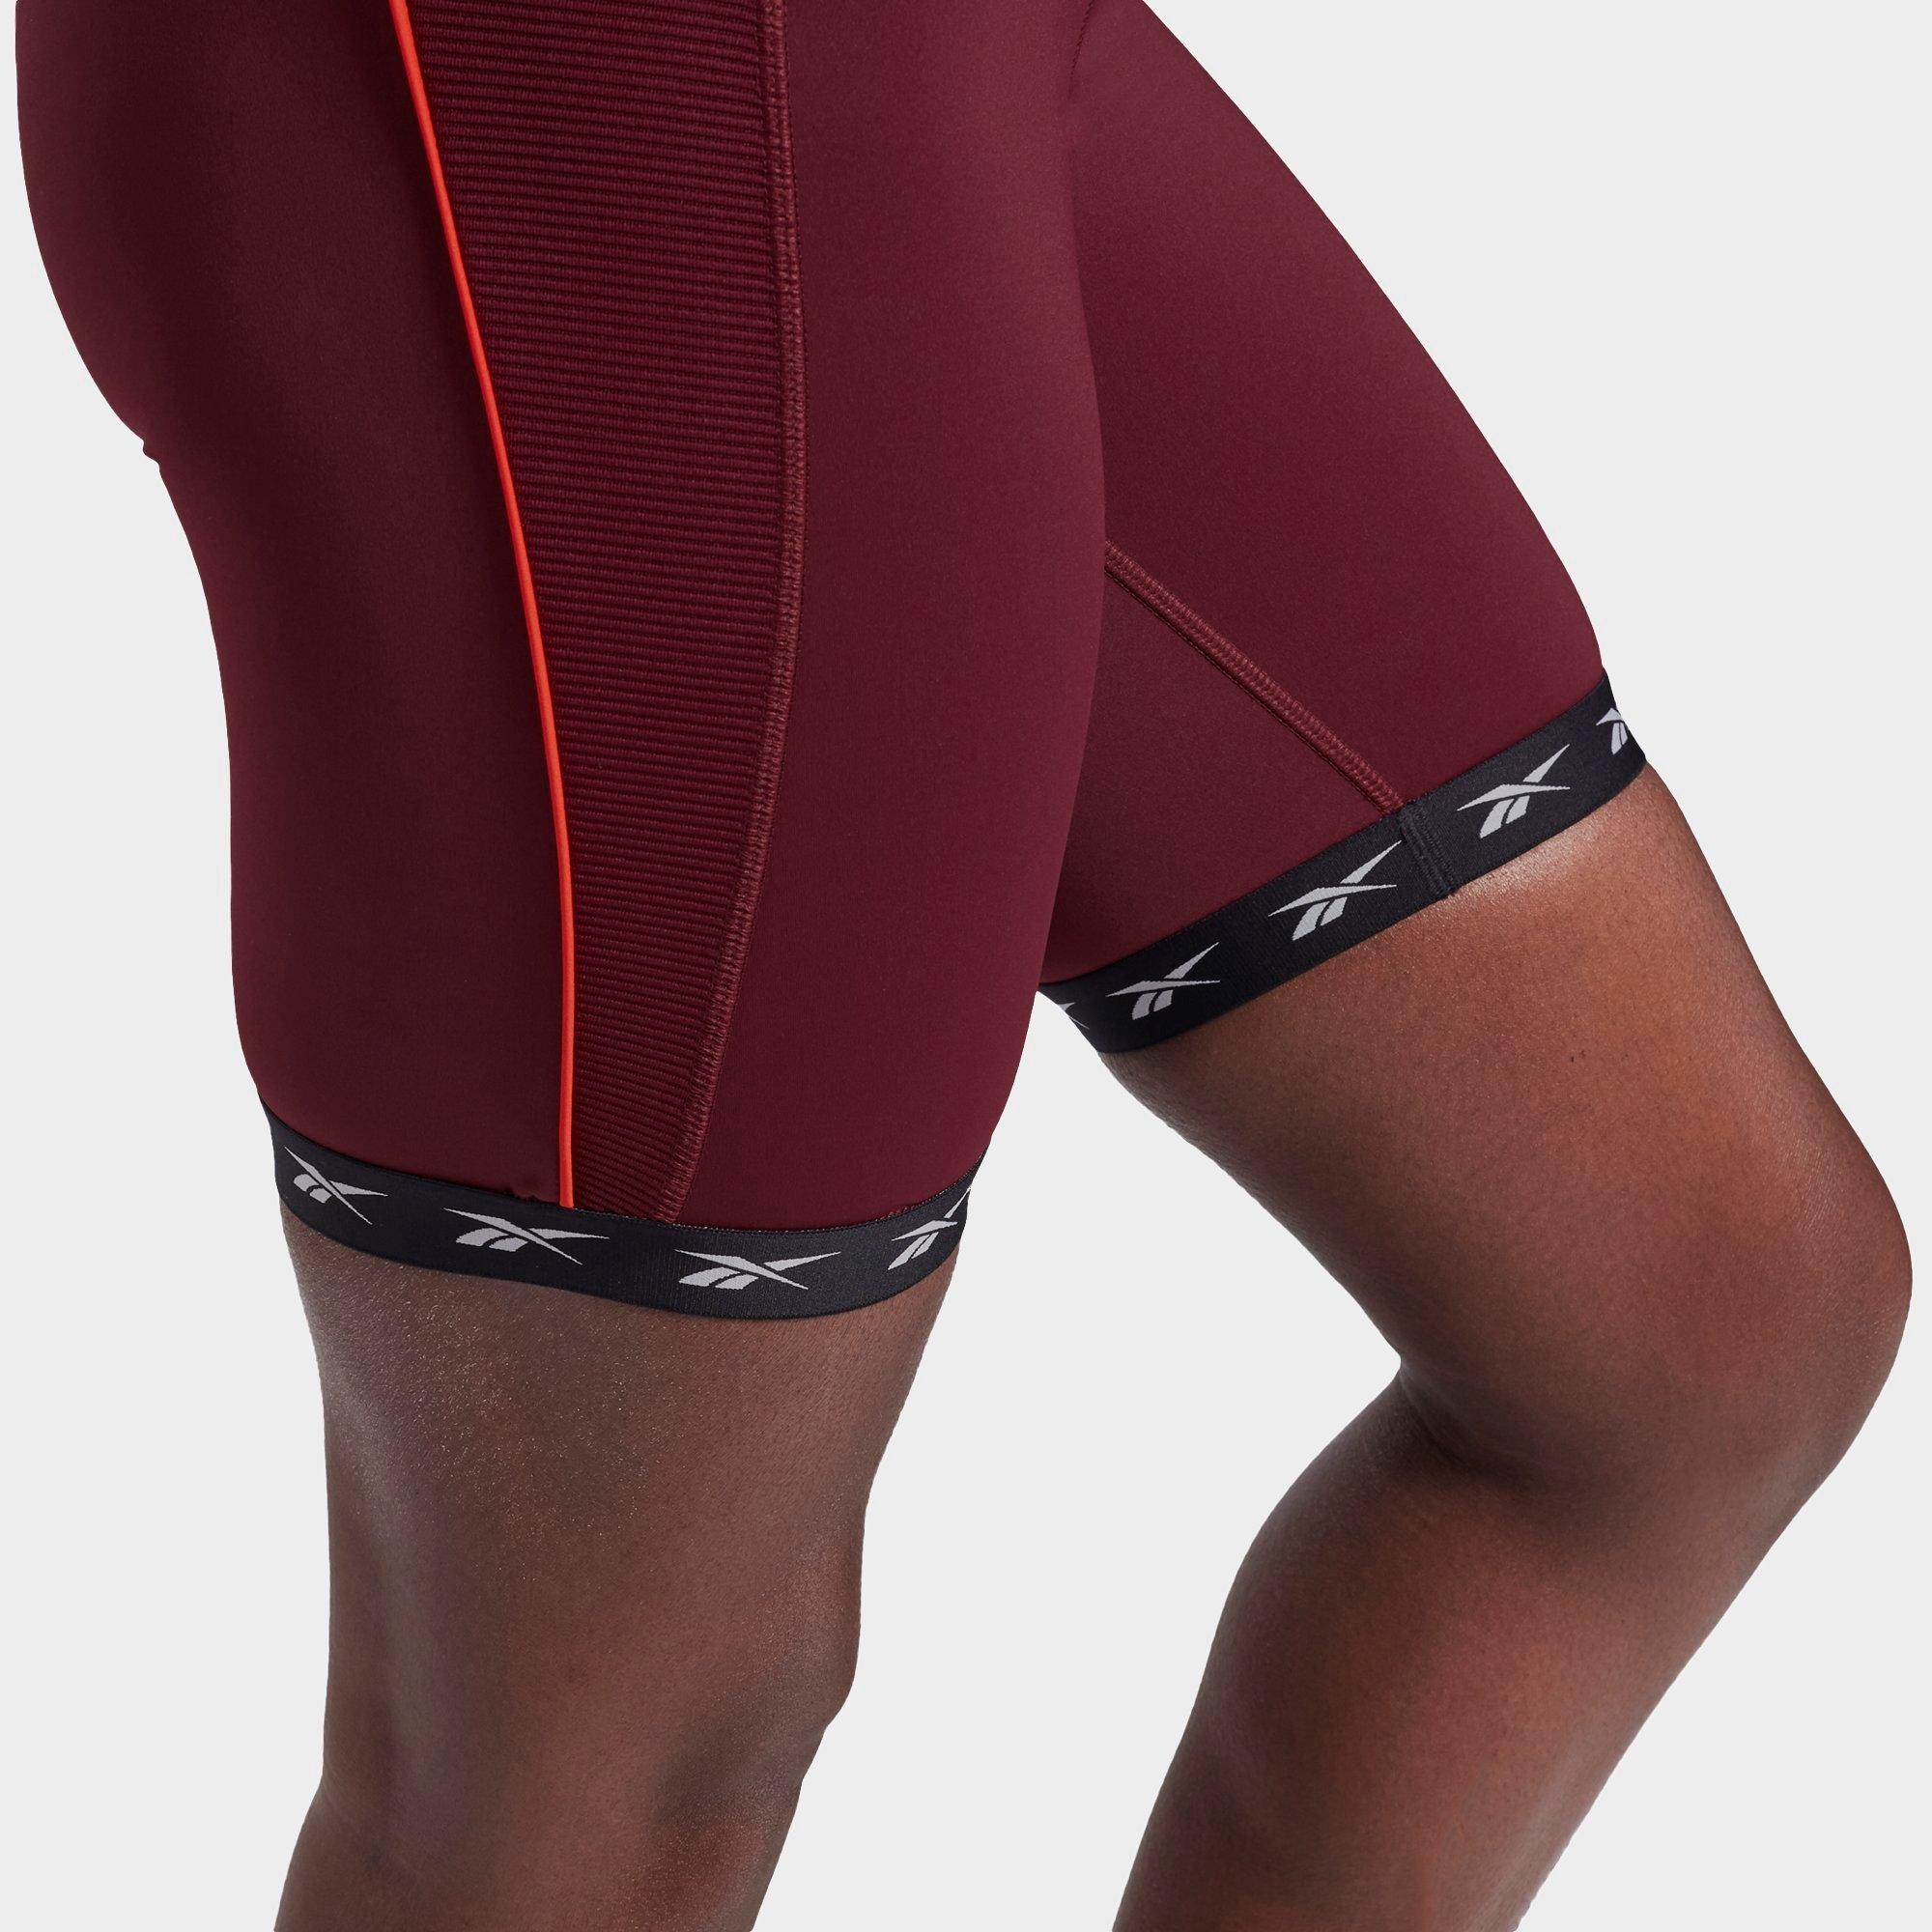 maroon bike shorts